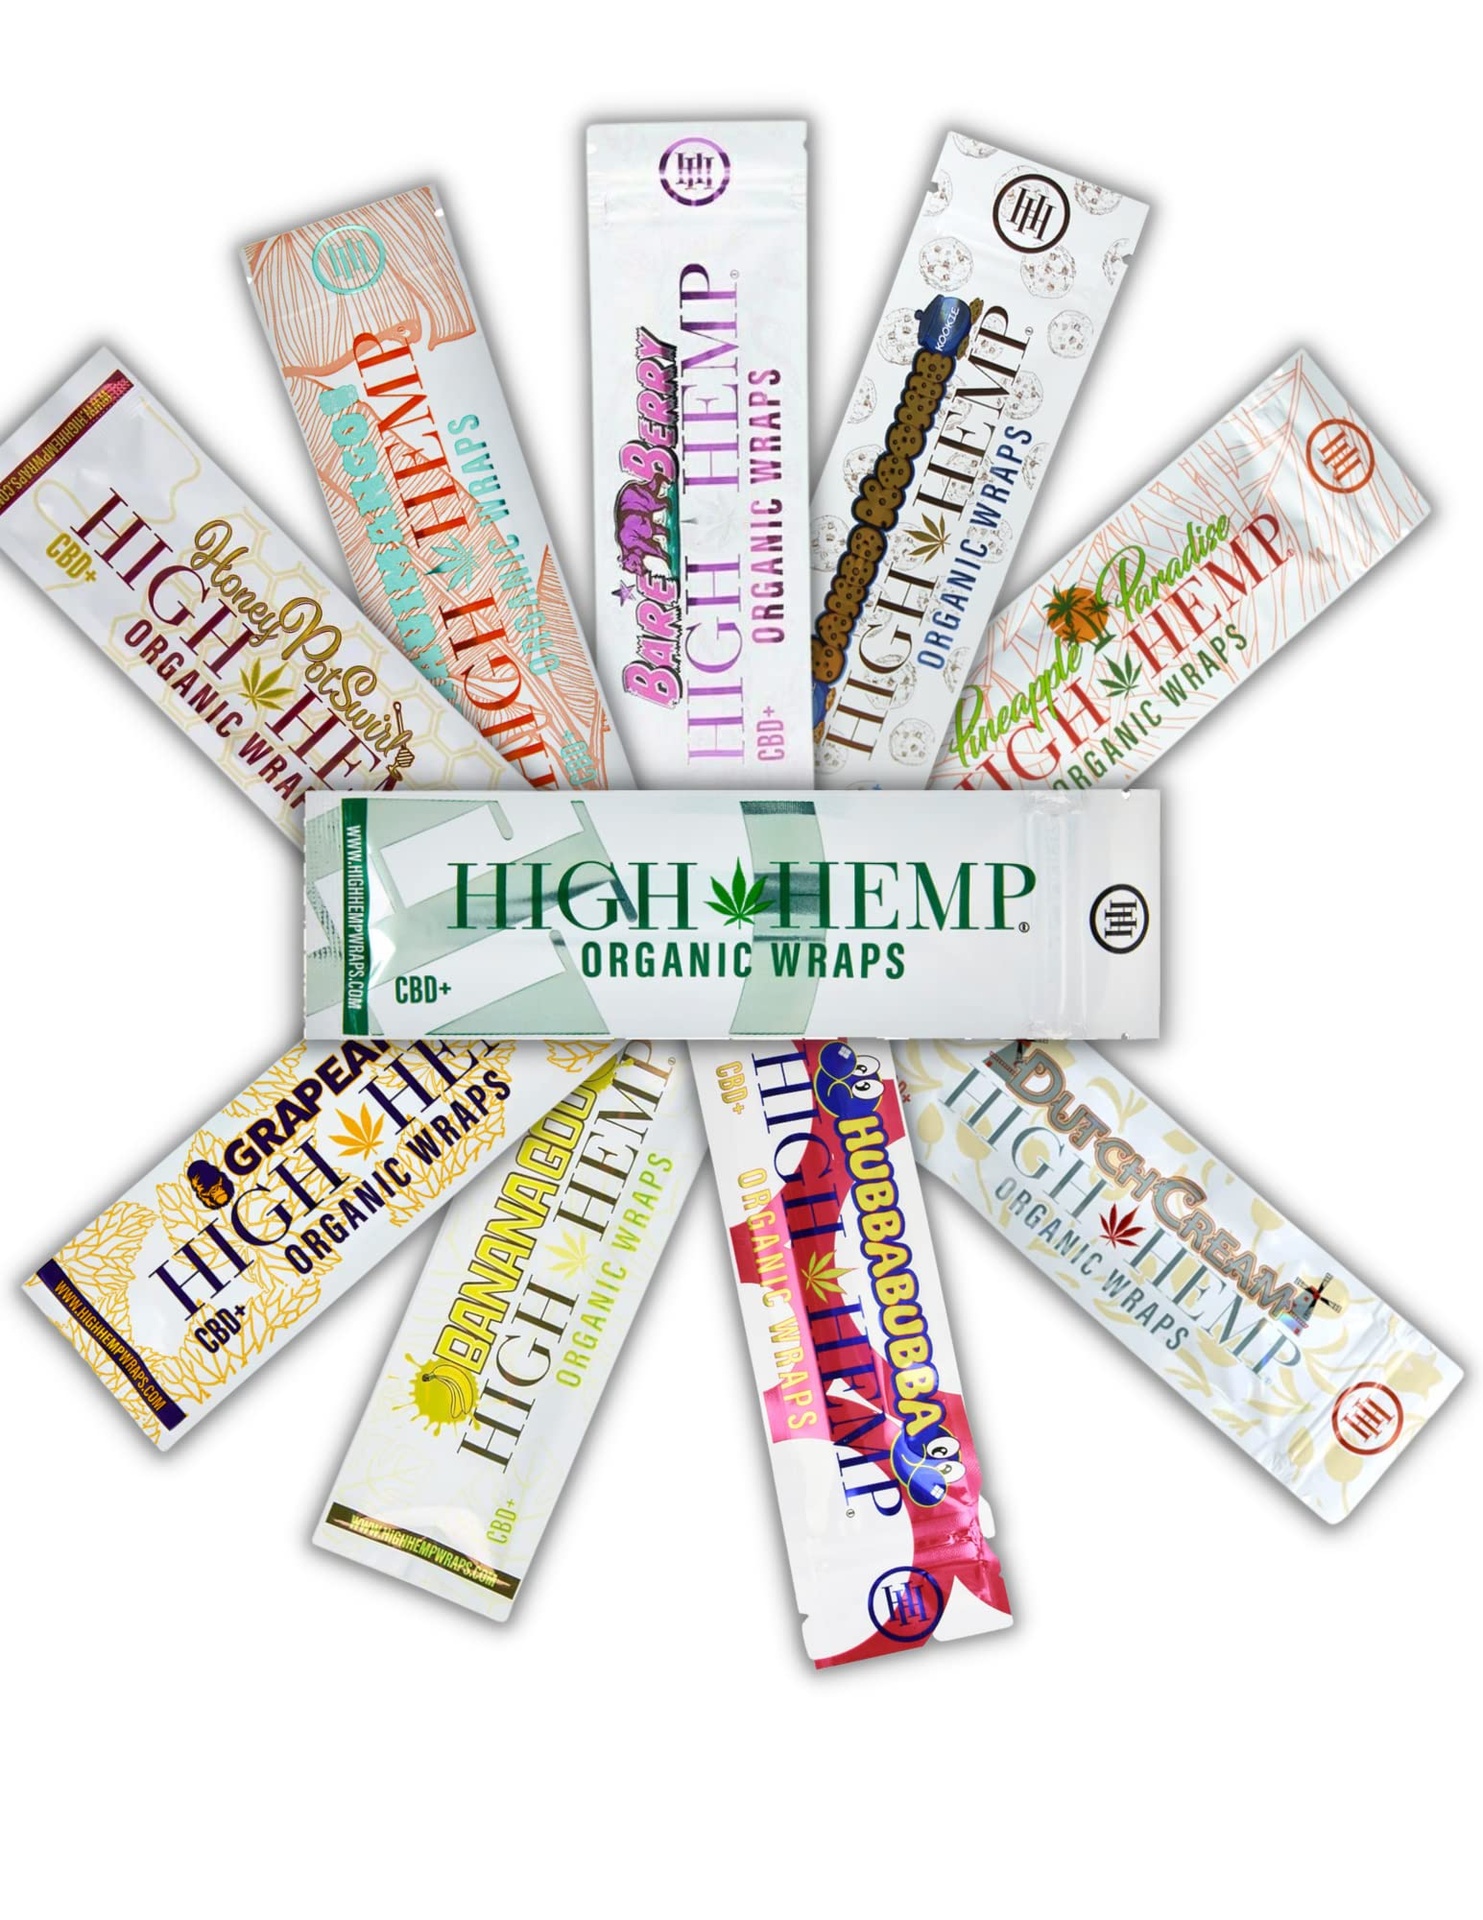 High Hemps Organic Wraps 2 Pack (Original)